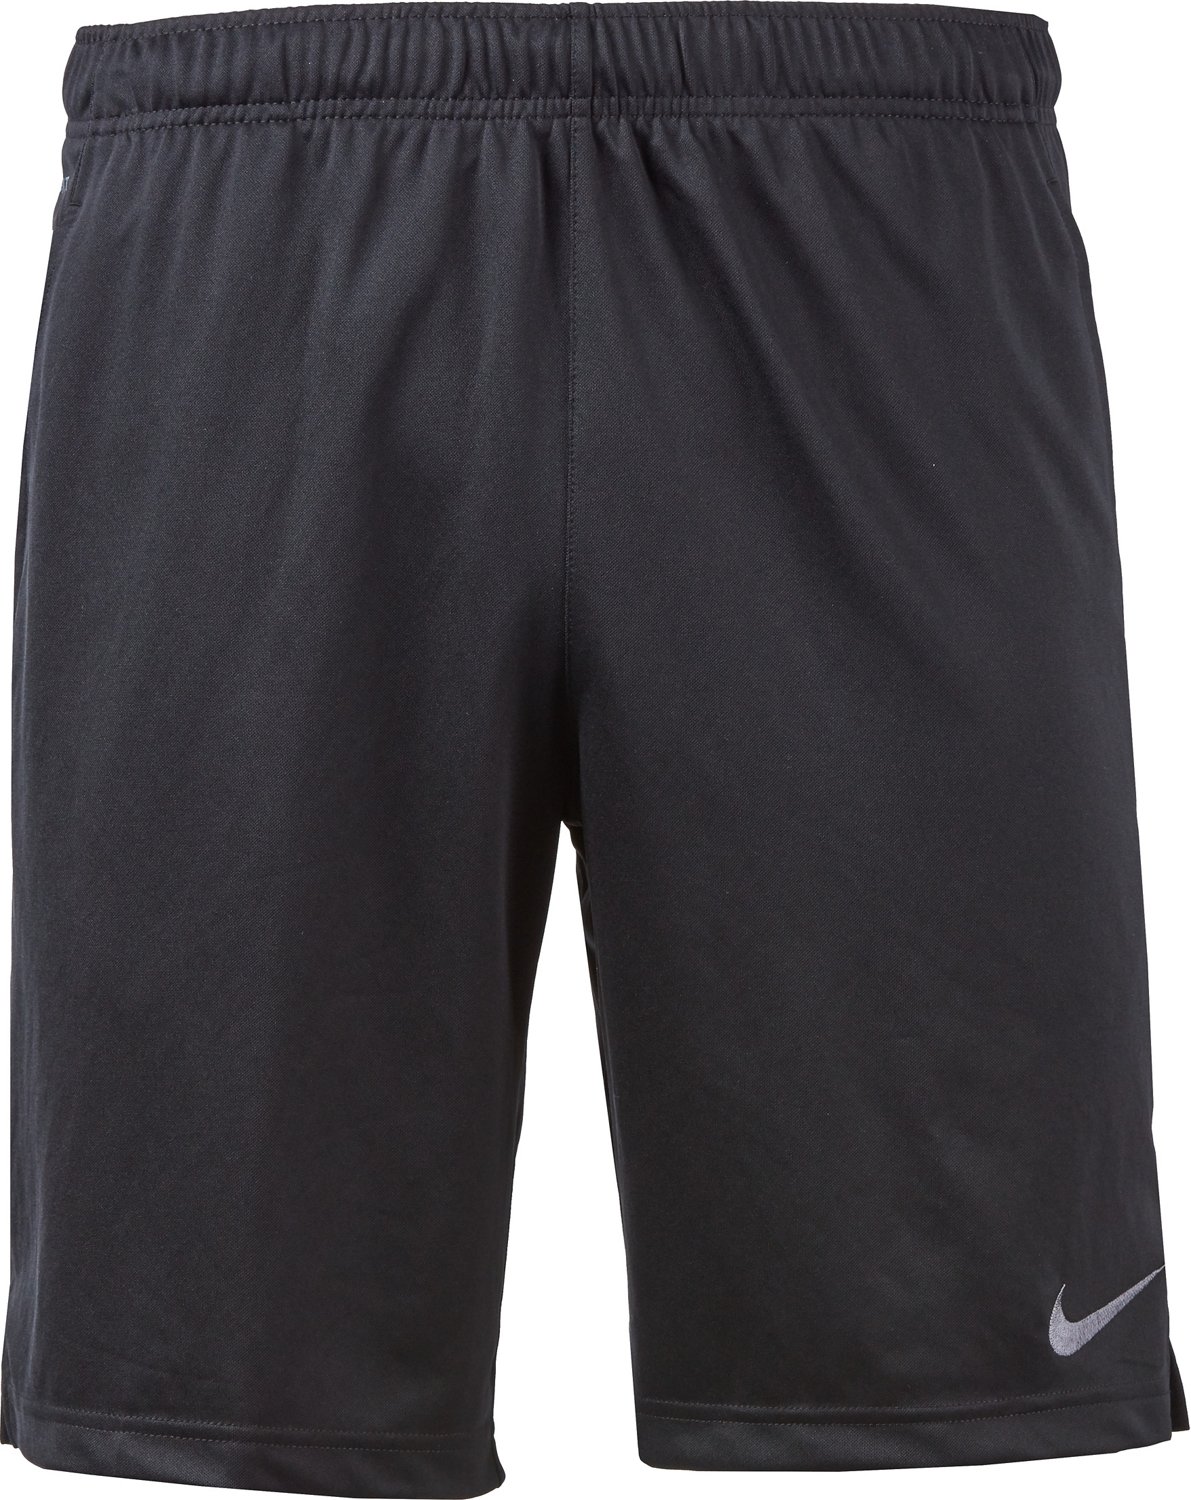 Men's Shorts | Men's Workout Shorts, Men's Athletic Shorts | Academy